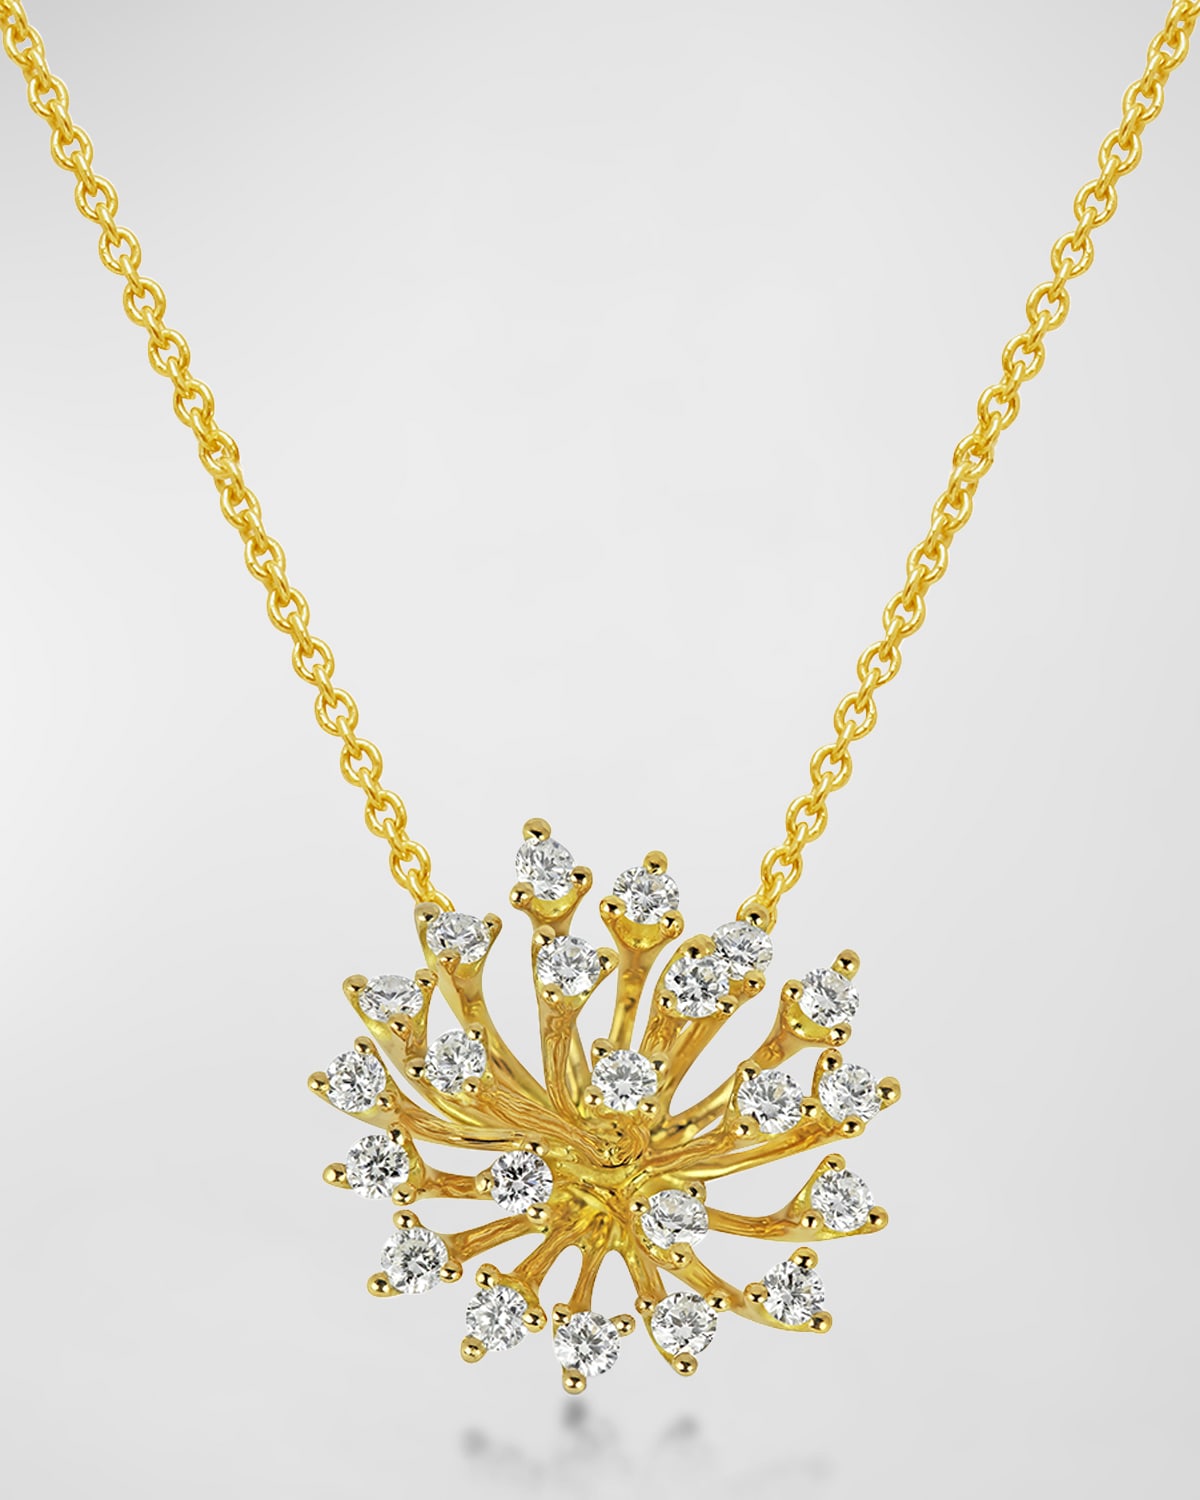 Hueb 18k Luminous Gold Diamond Pendant Necklace, 18" In Yellow Gold